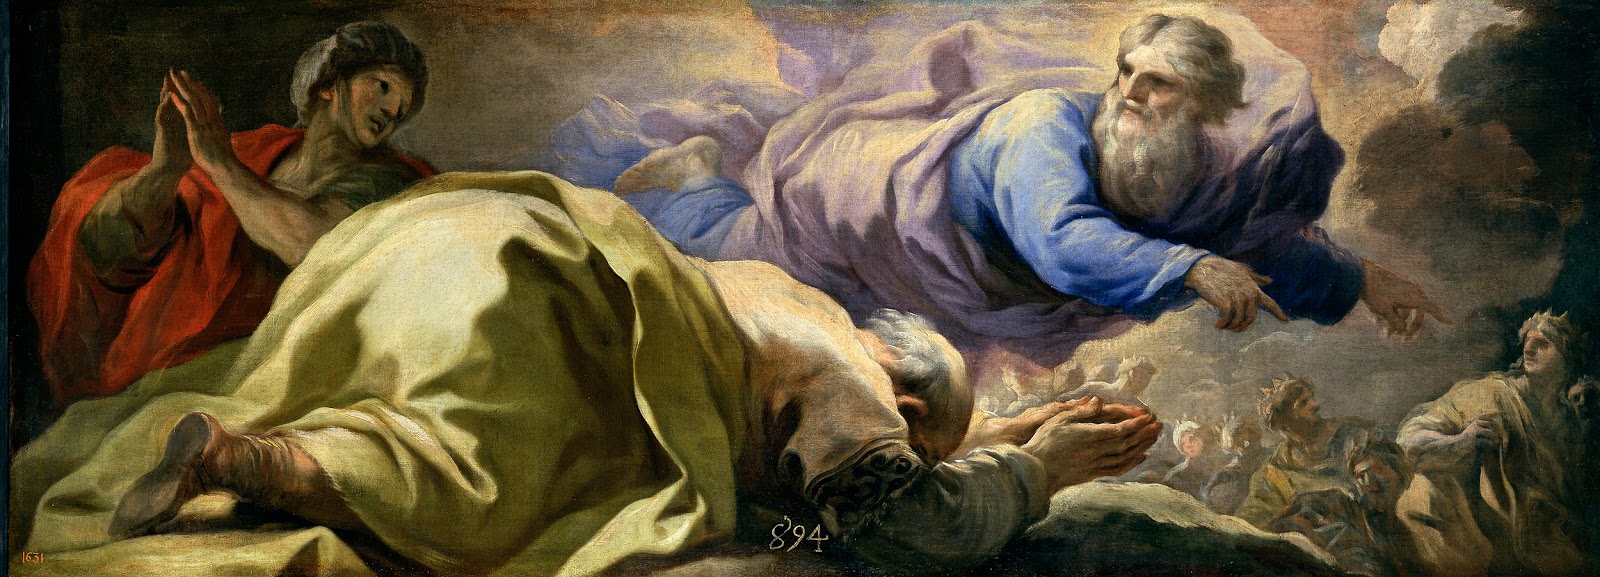 Luca+Giordano-1632-1705 (6).jpg